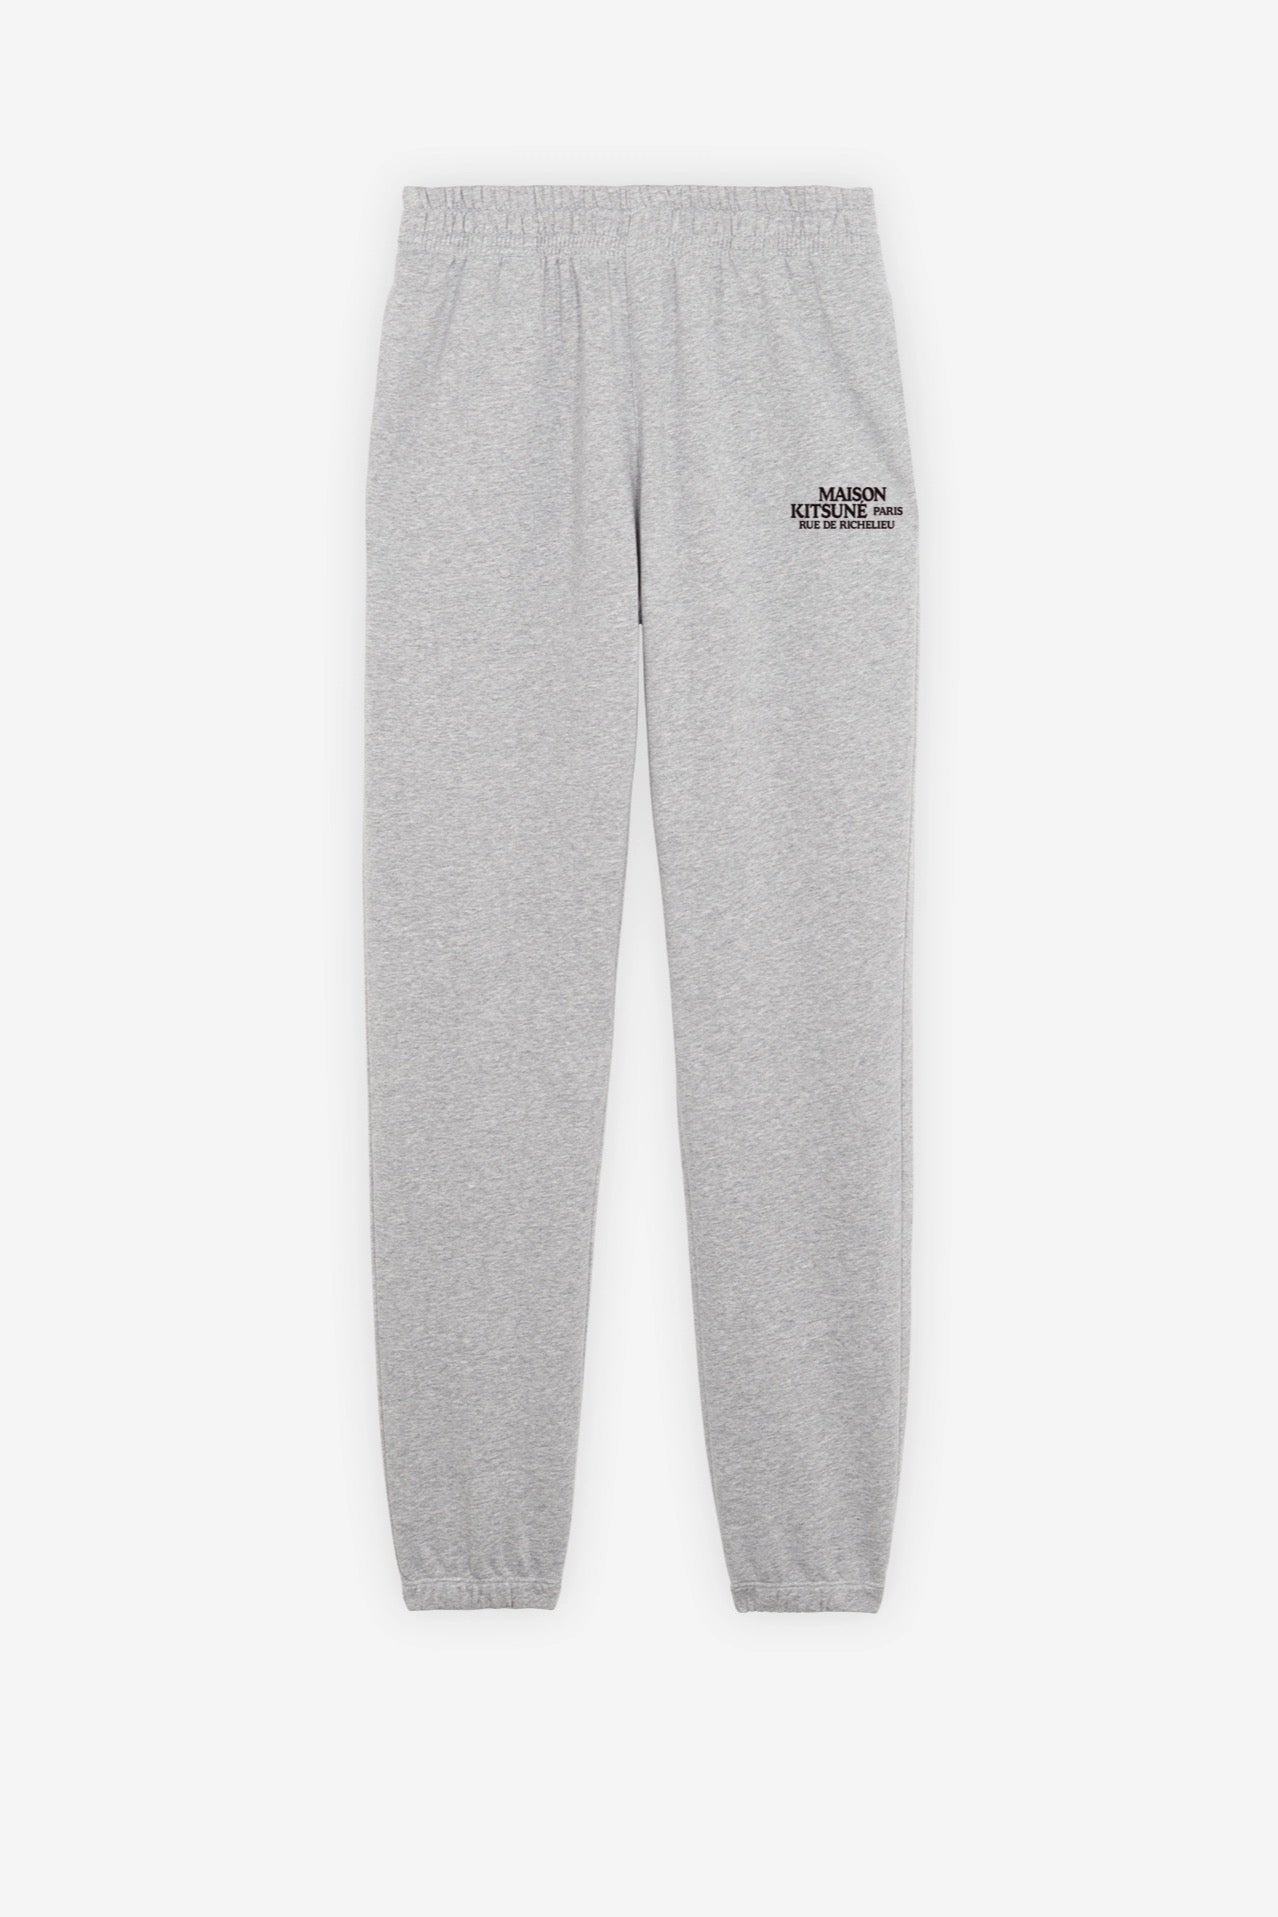 Jogging pants in grey